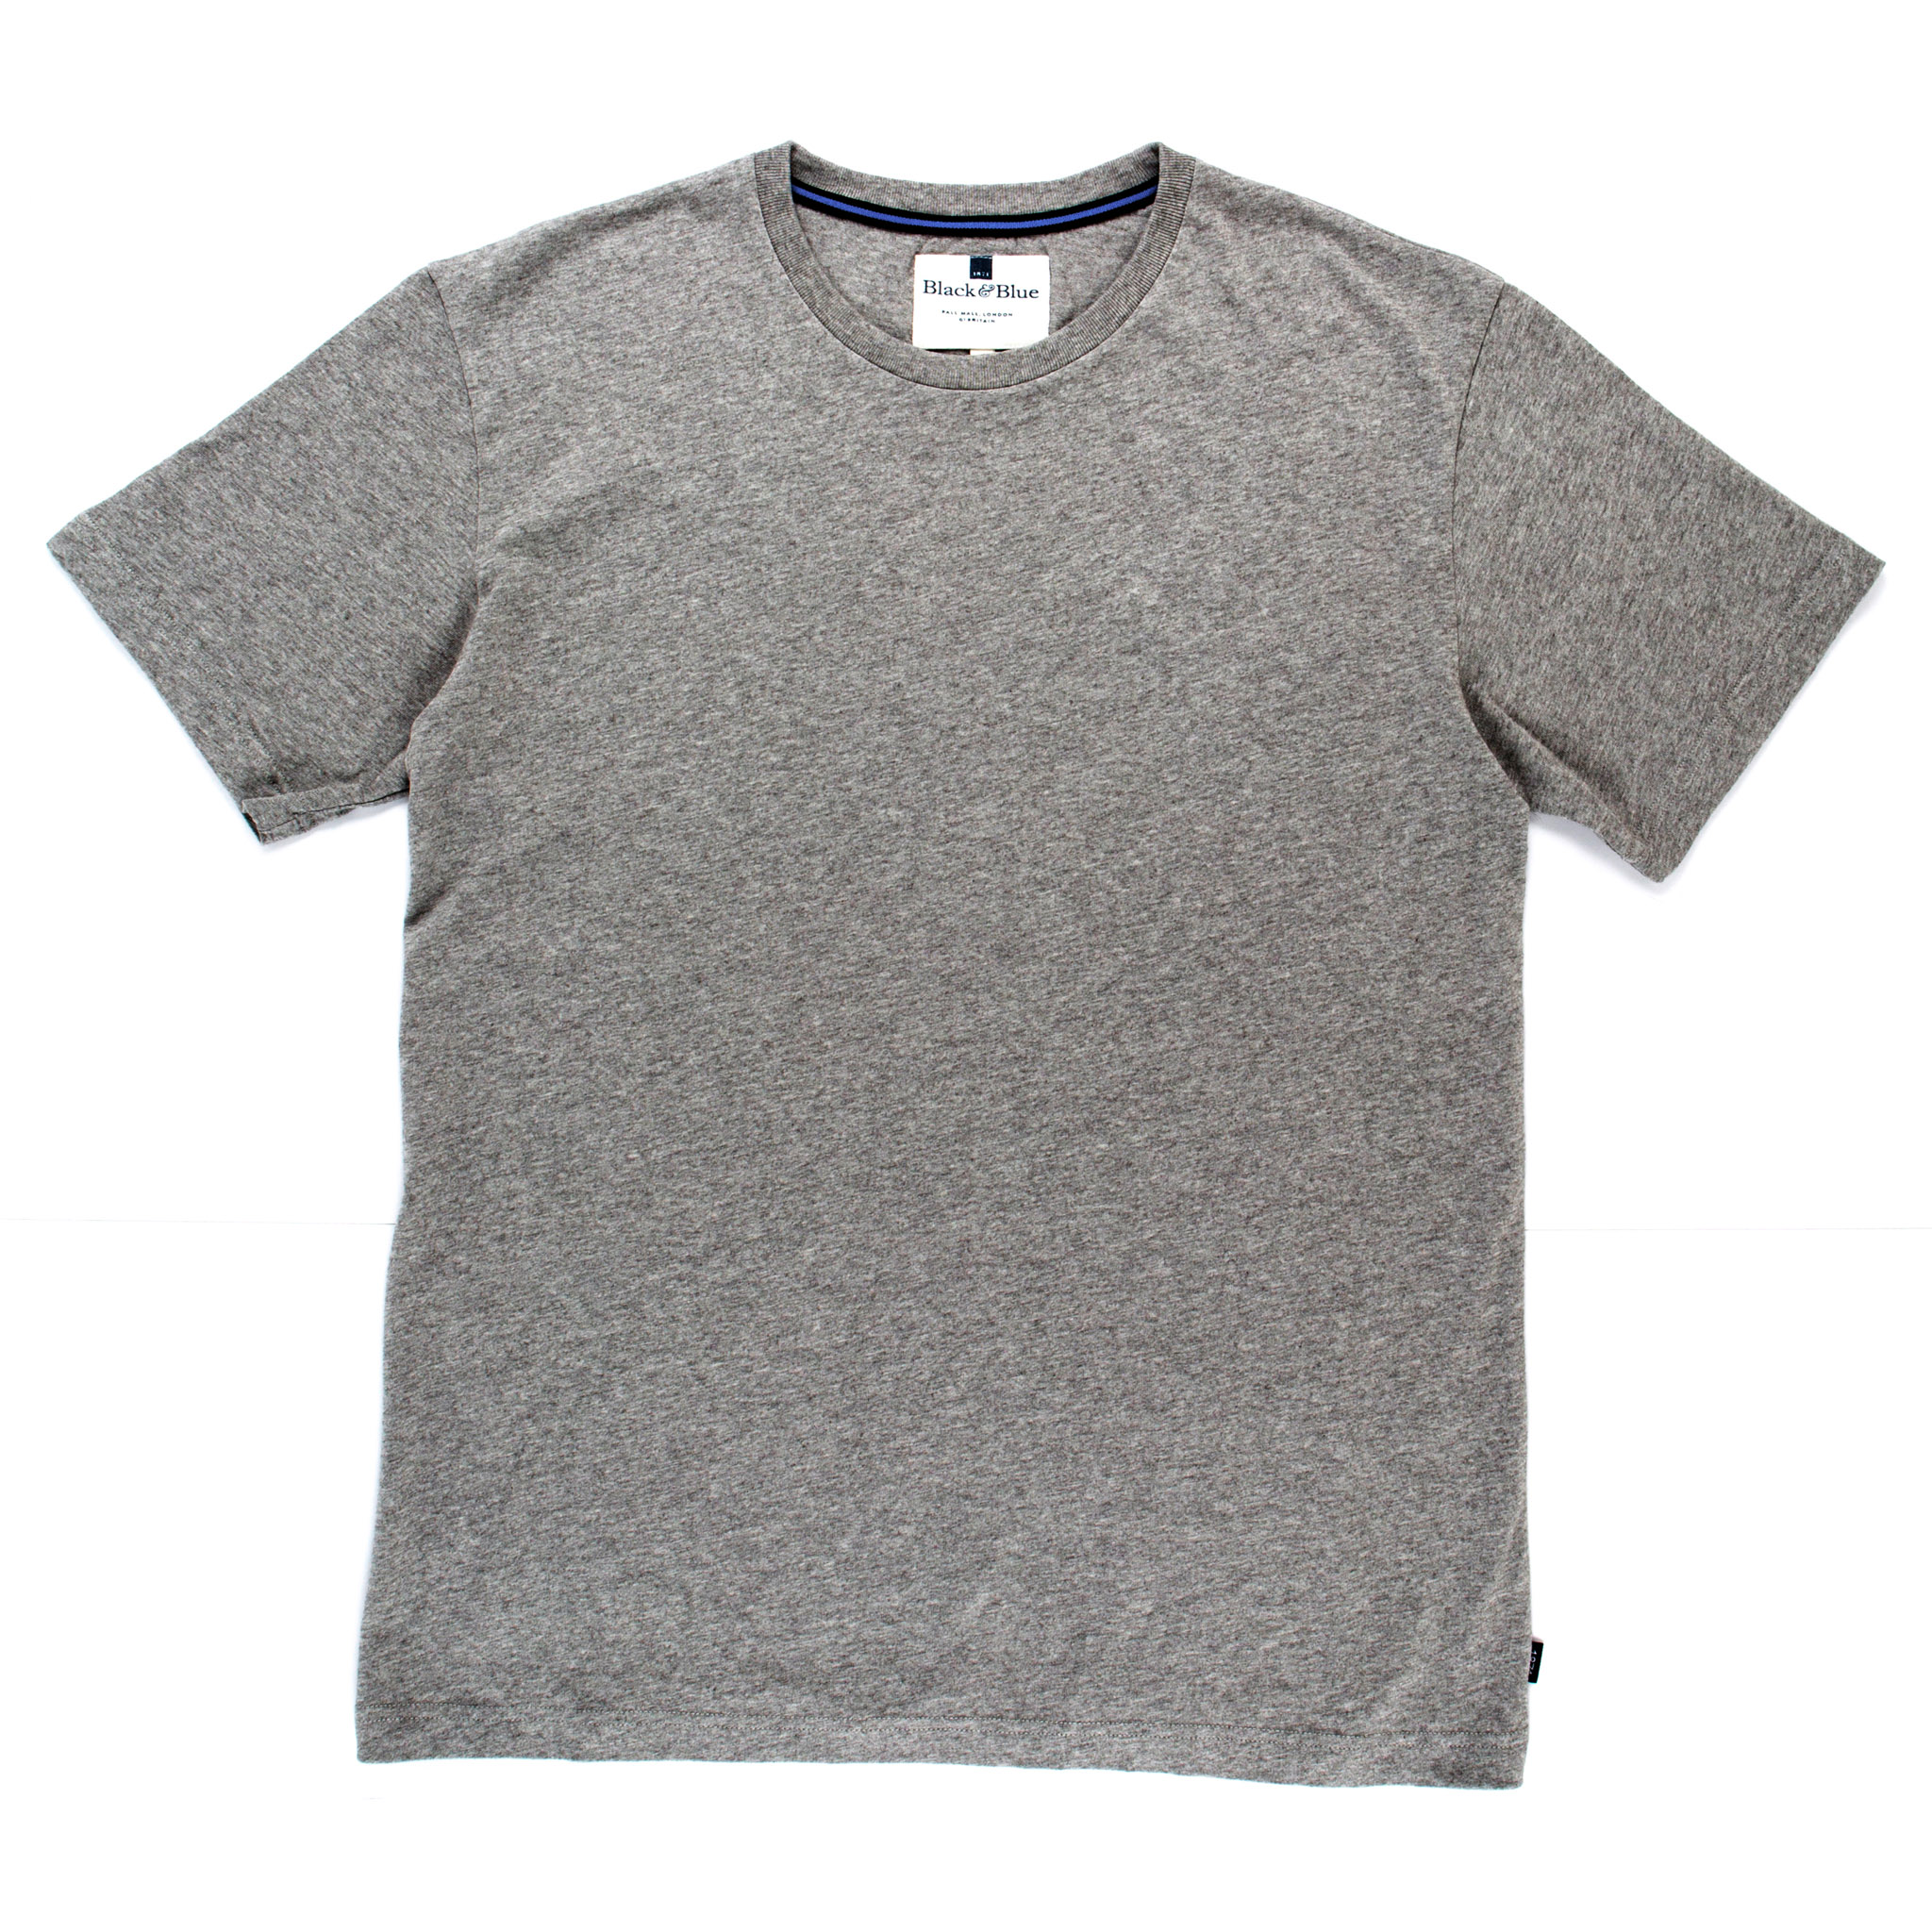 Grey Organic cotton T-shirt